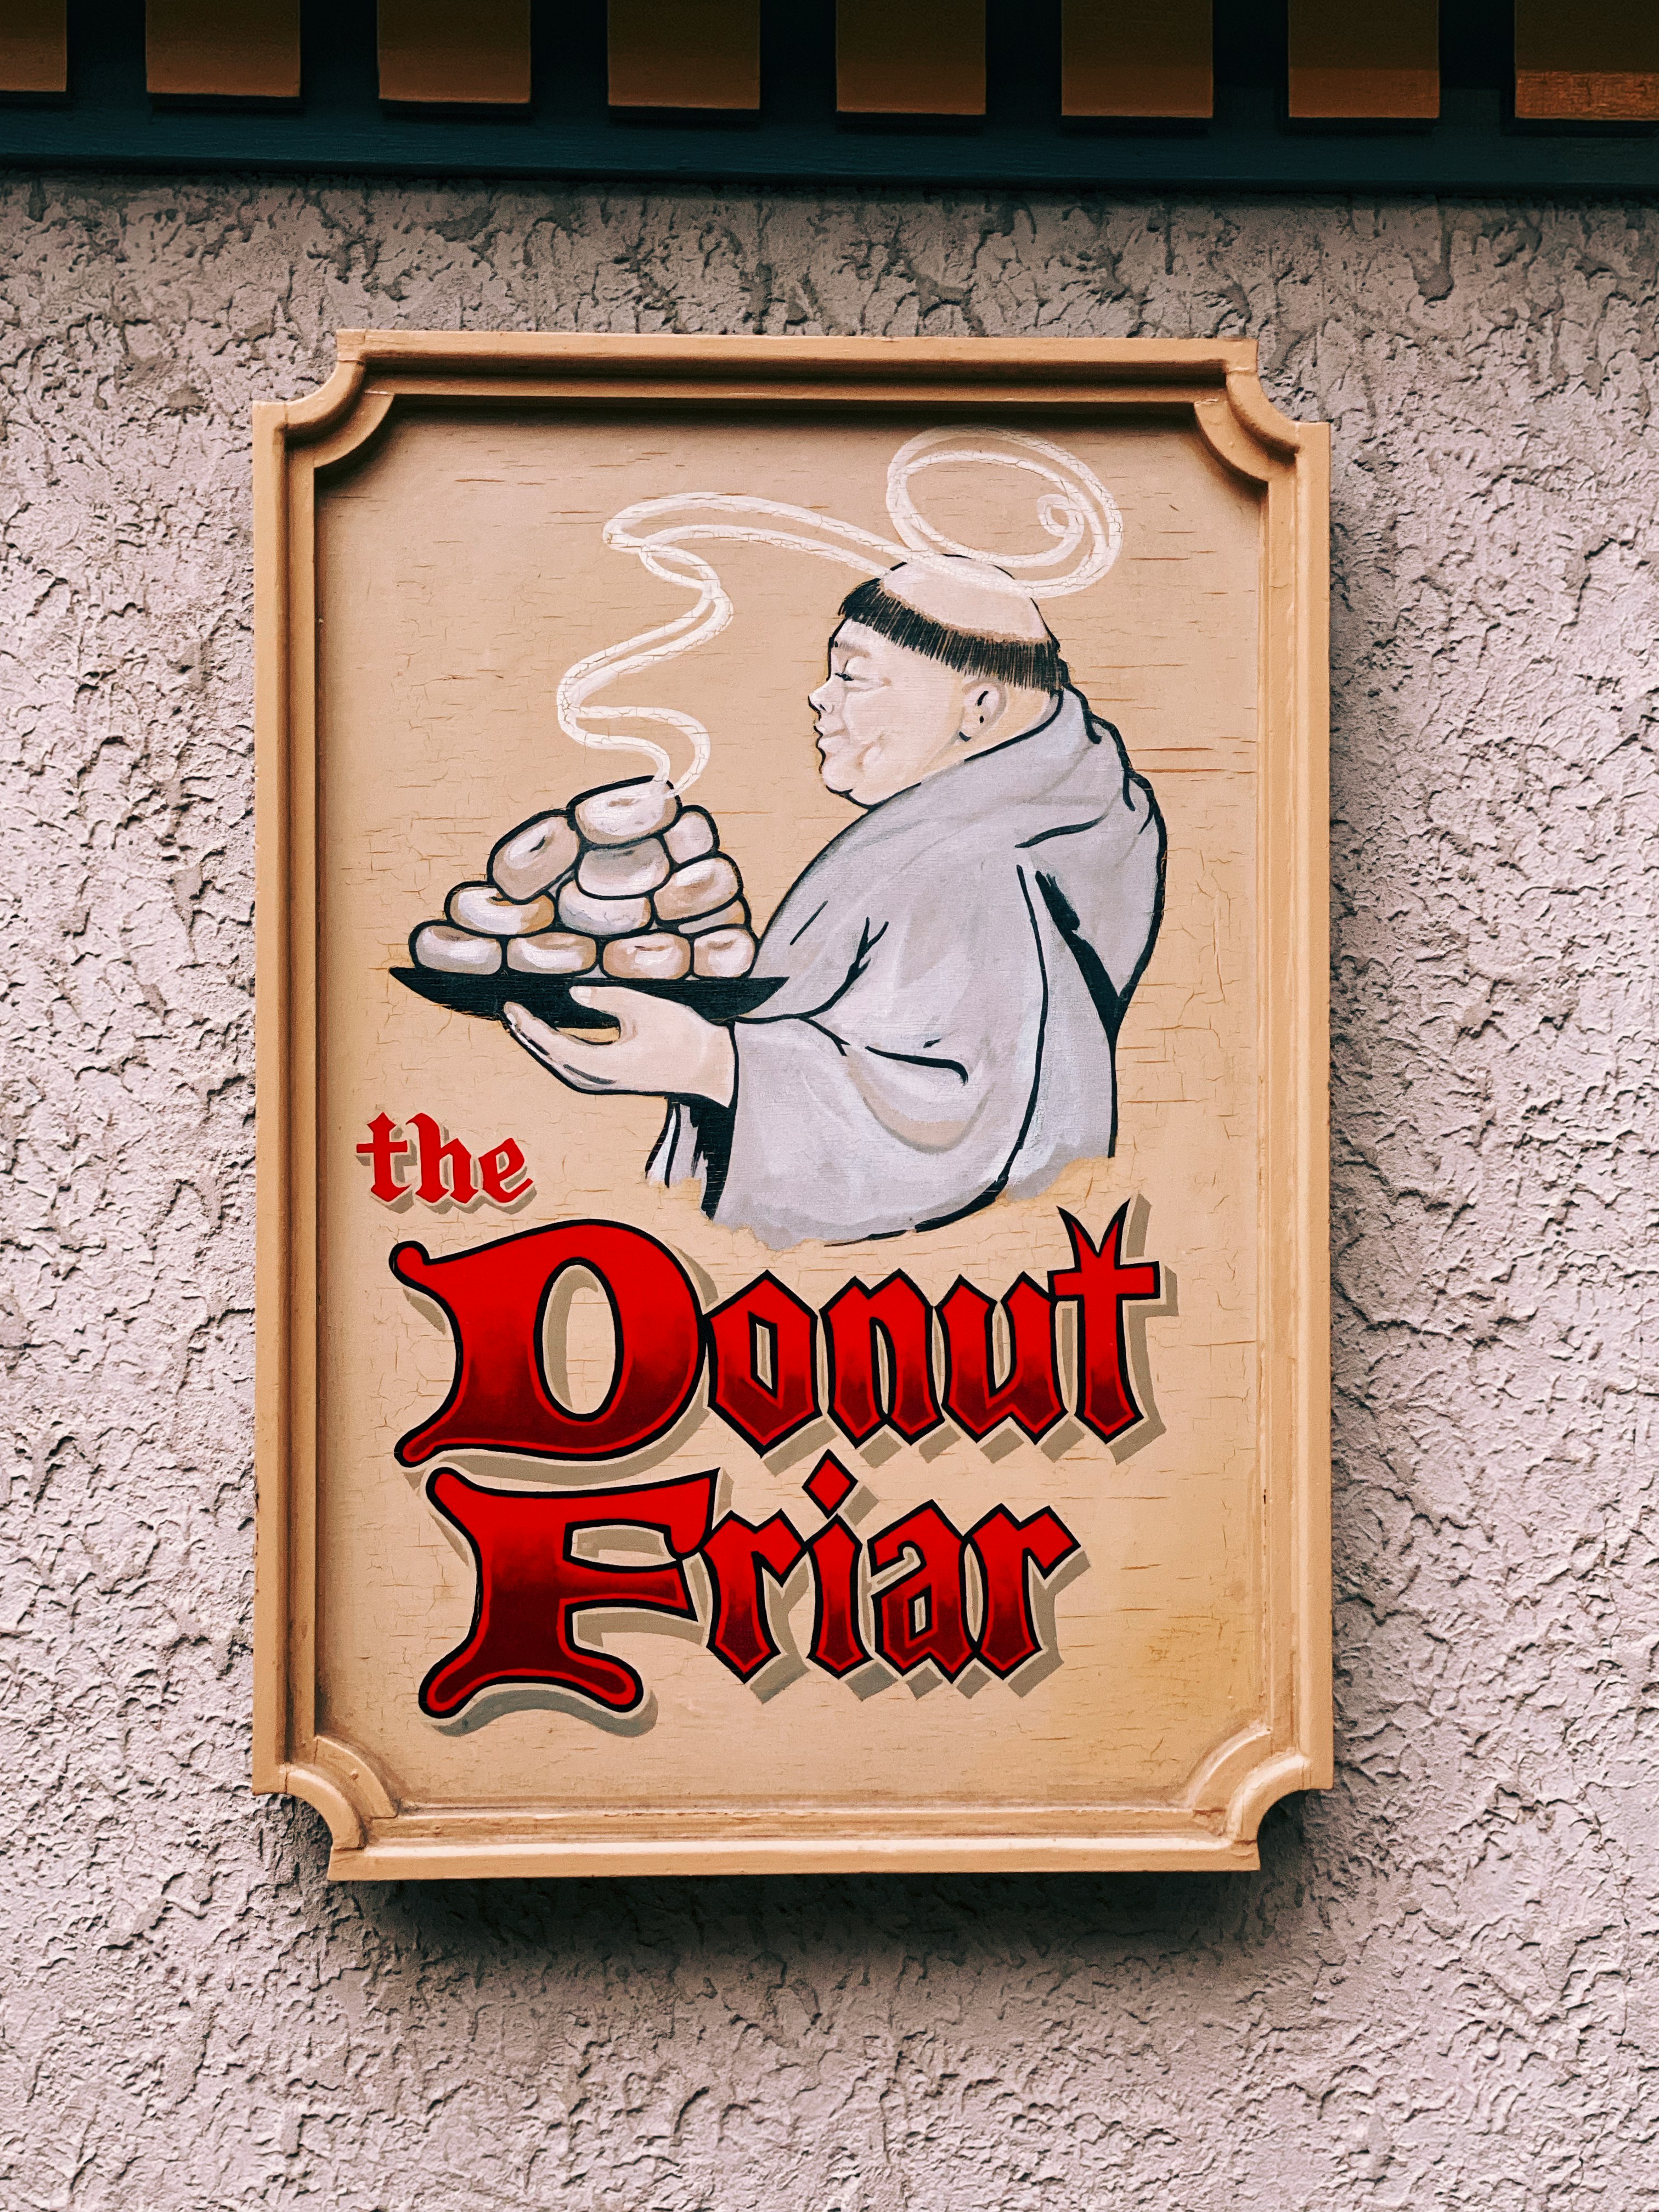 The Donut Frior photo frame